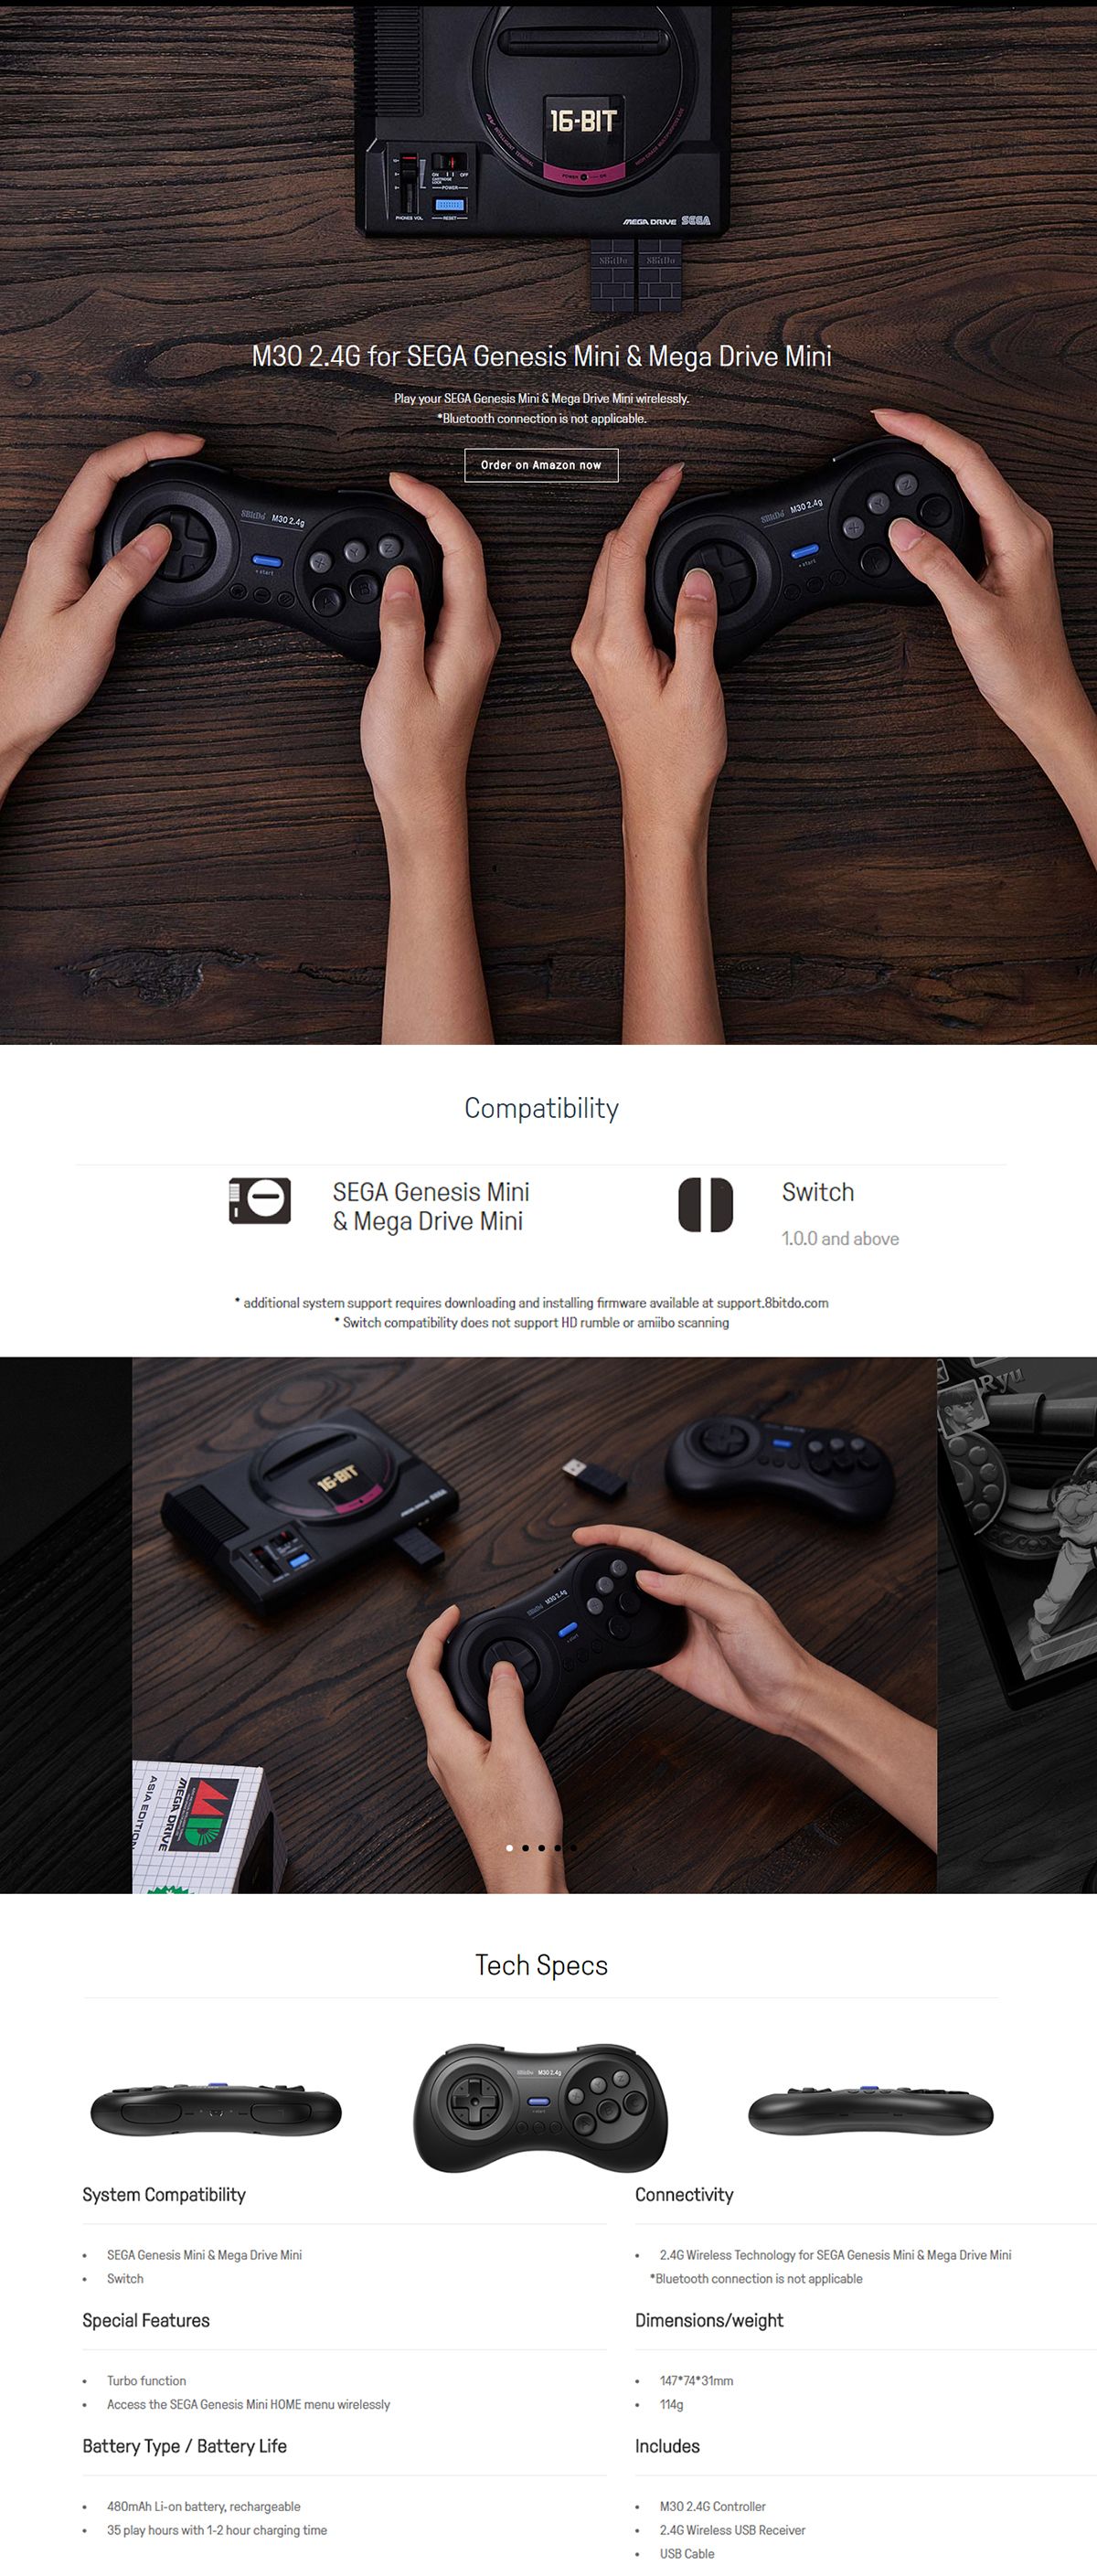 8bitdo-M30-Mini-24G-Wireless-Gamepad-Game-Controller-for-Nintendo-Switch-for-SEGA-Genesis-Mini-for-M-1593317